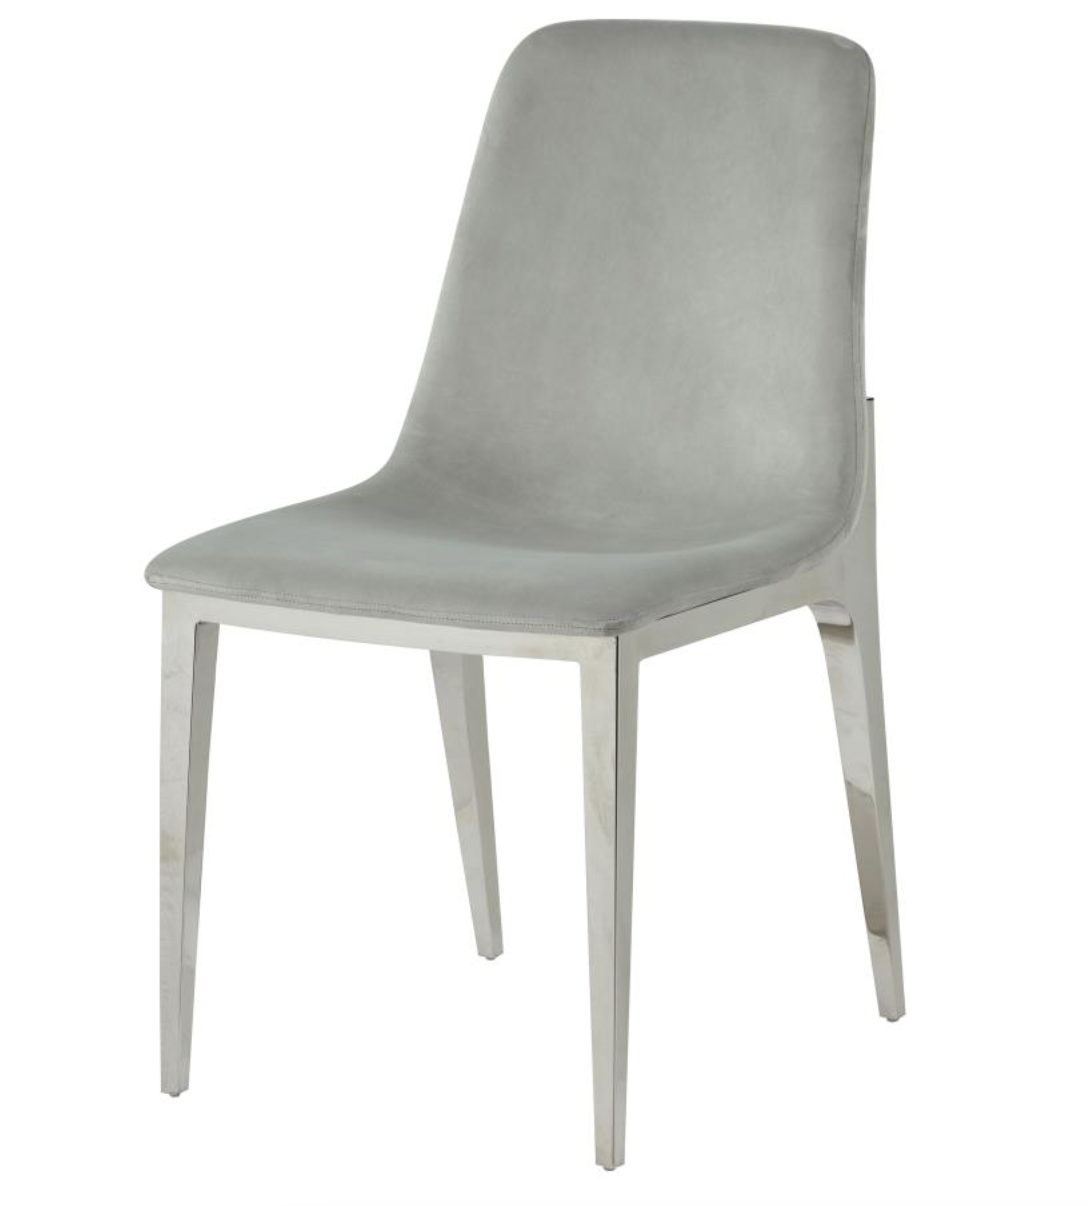 IRENE Upholstered Side Dining Chair